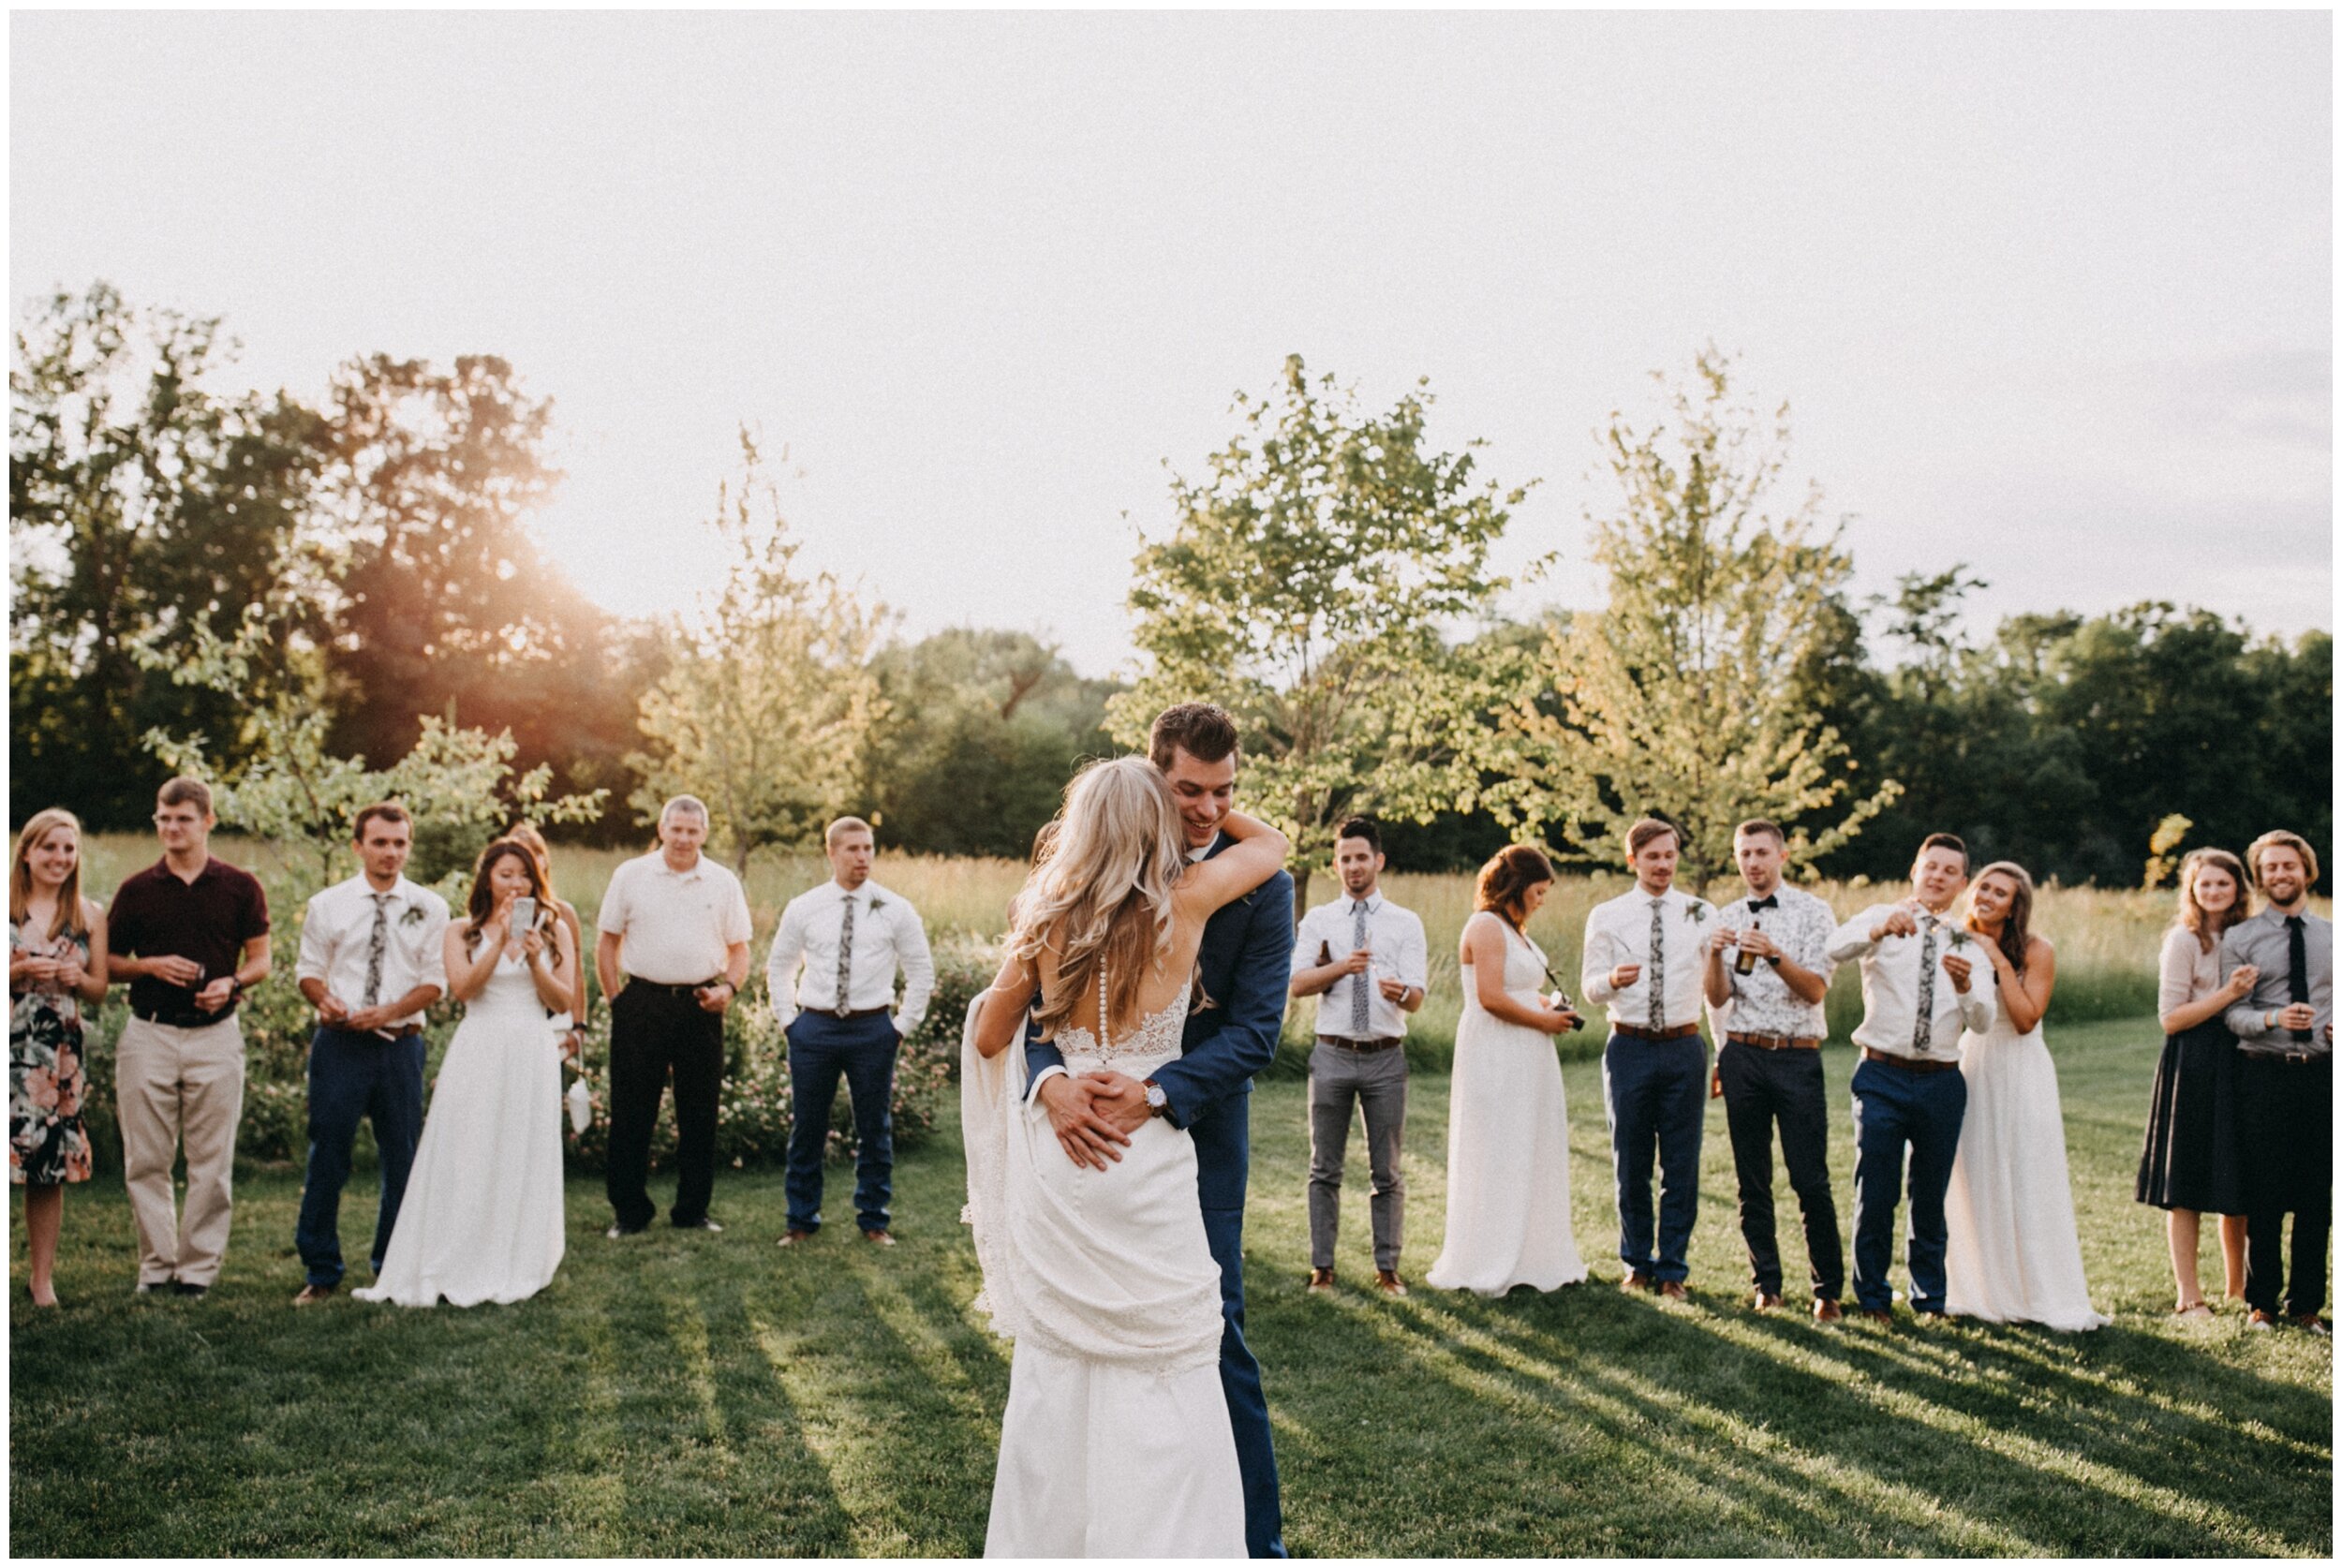 Bride and groom sparkler dance during sunset at outdoor Minnesota barn wedding